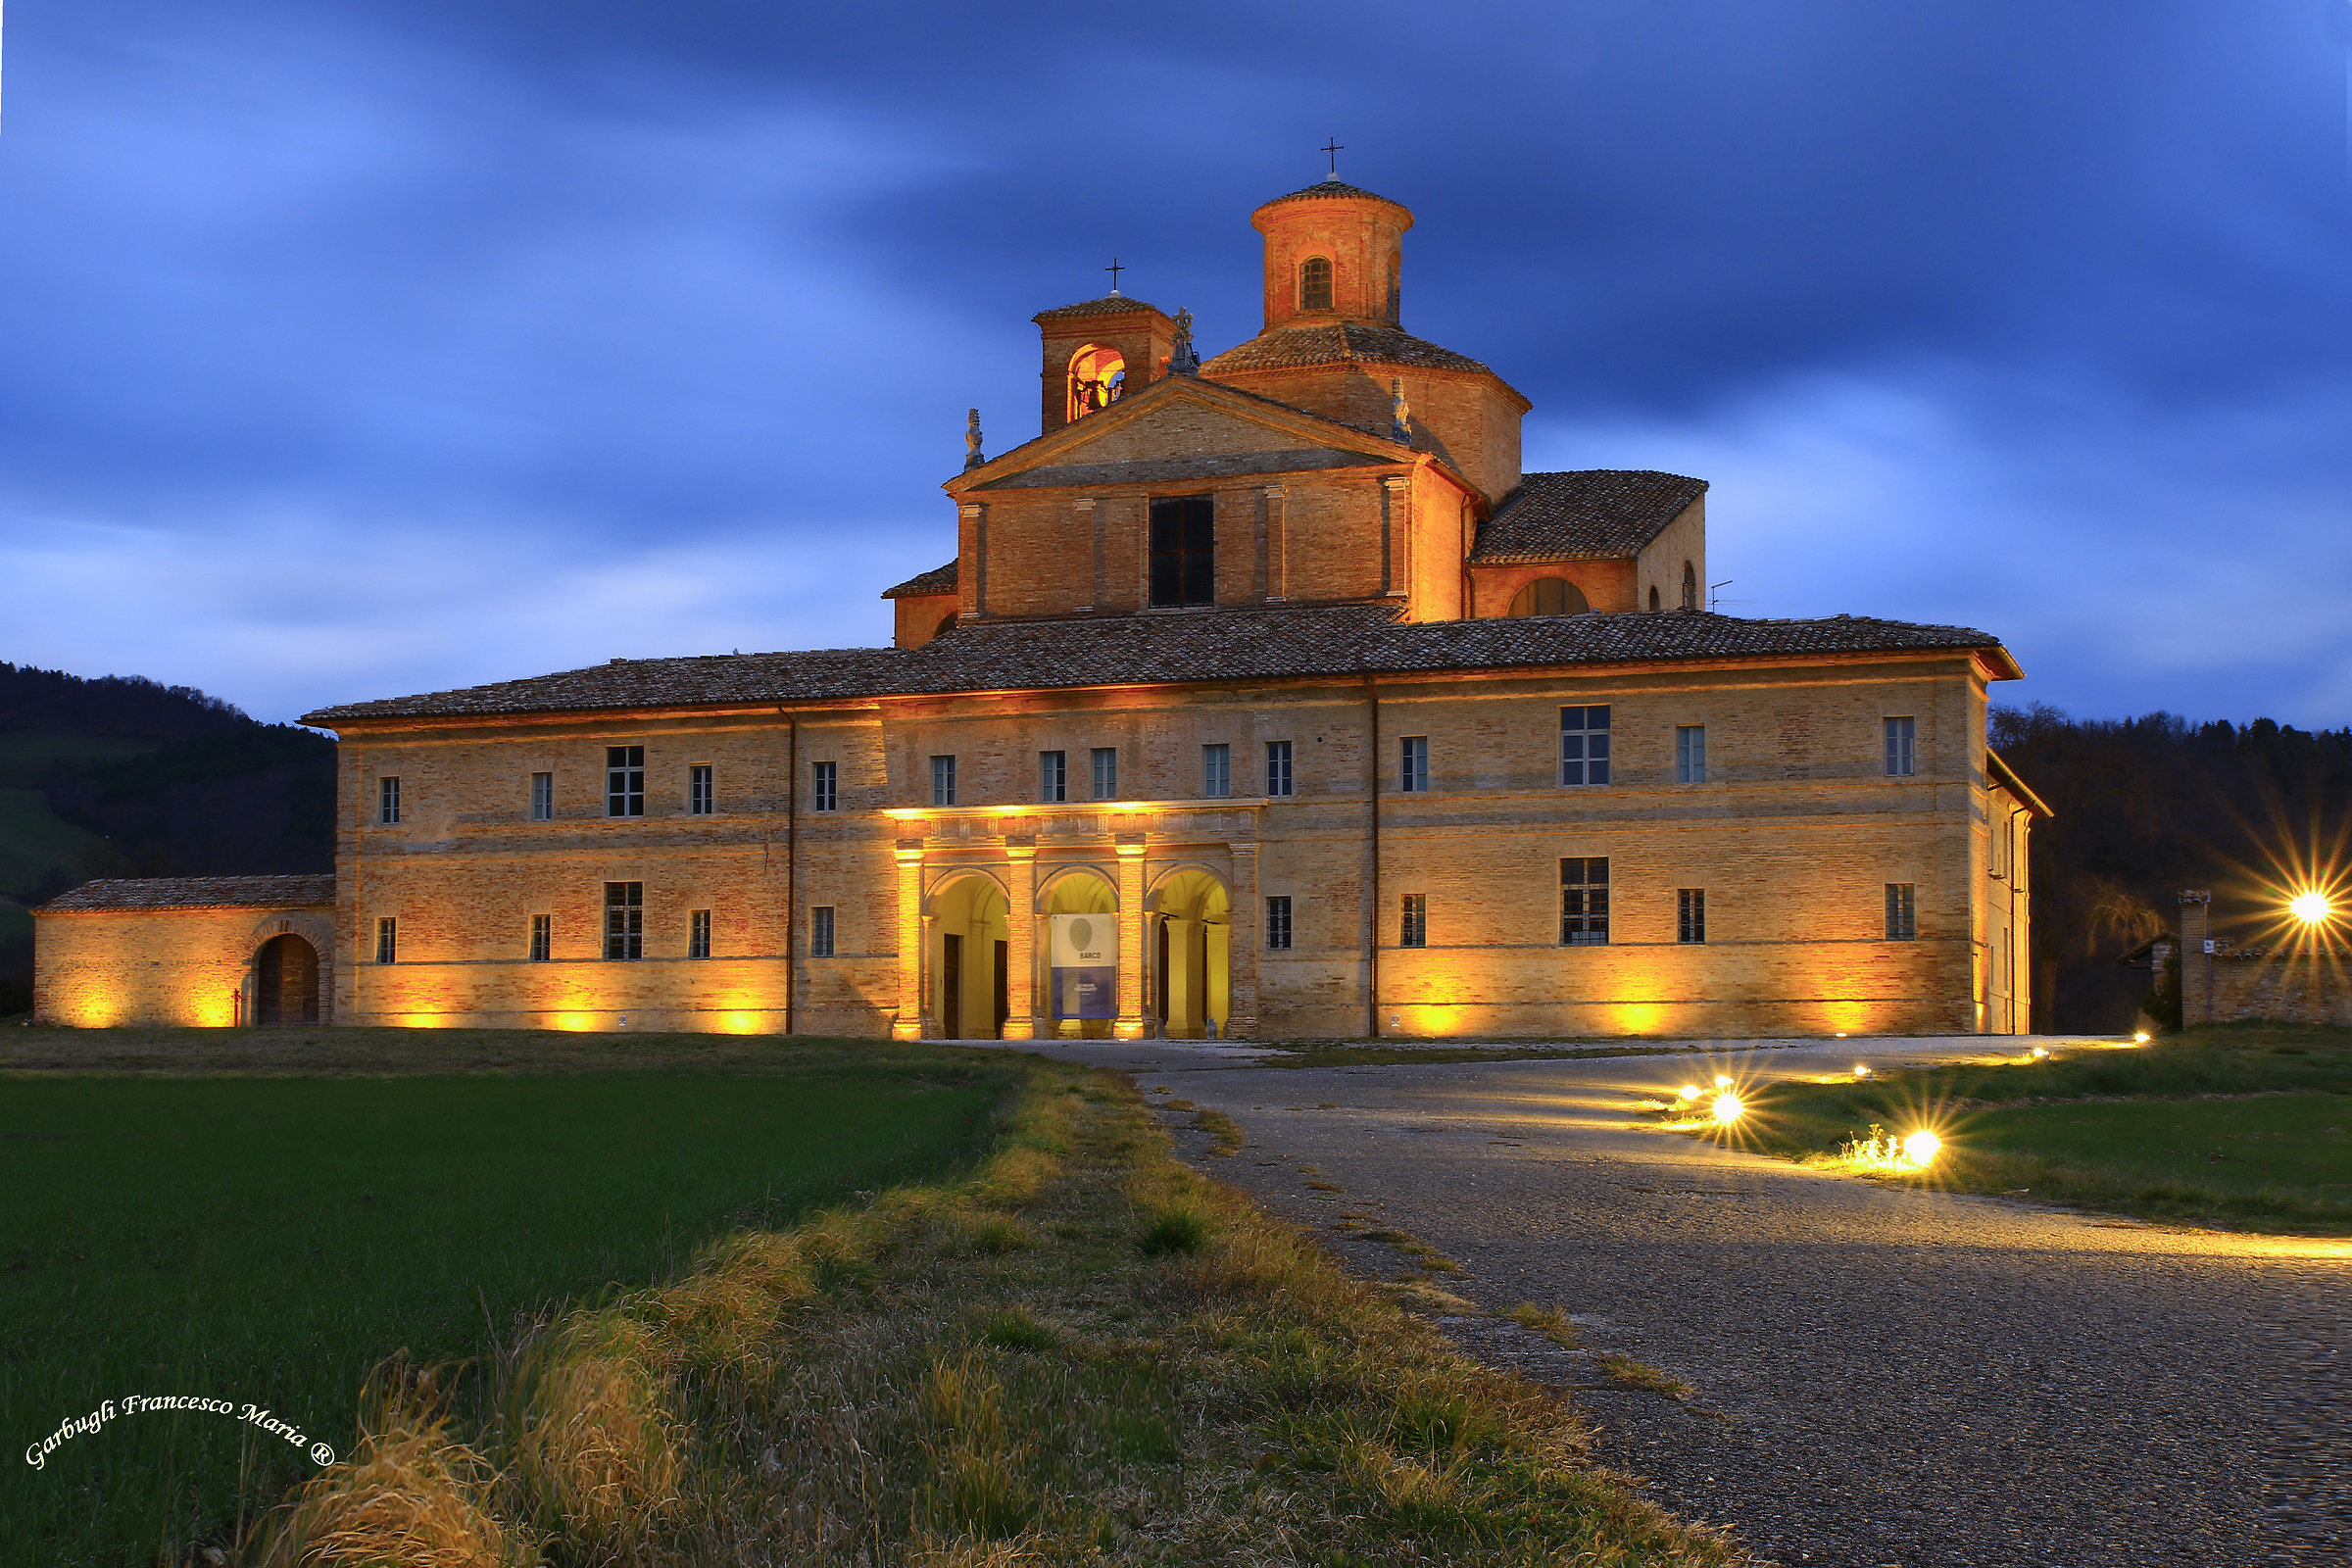 lights on to the Duke of Urbino hunting lodge...